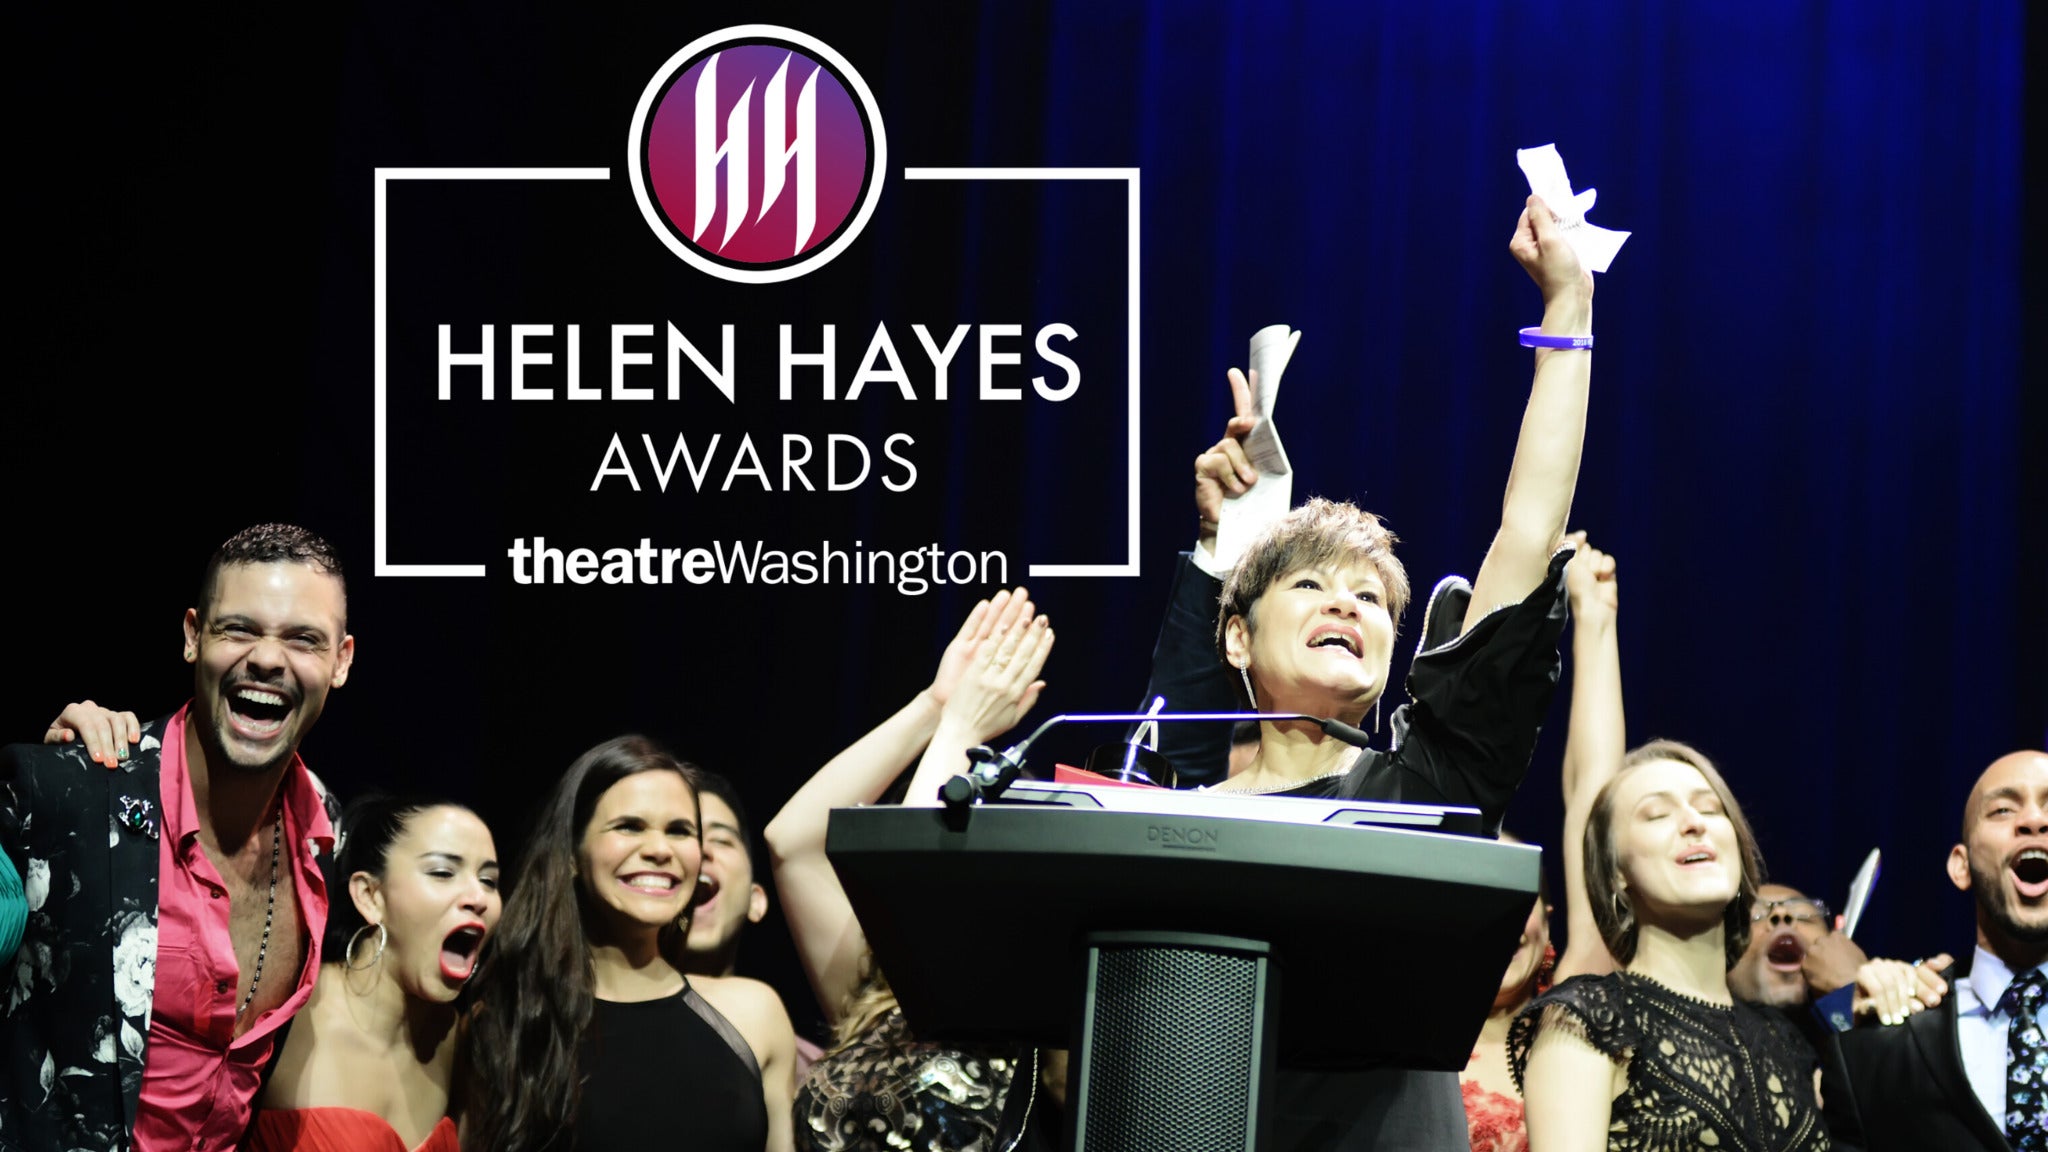 Helen Hayes Awards presale information on freepresalepasswords.com